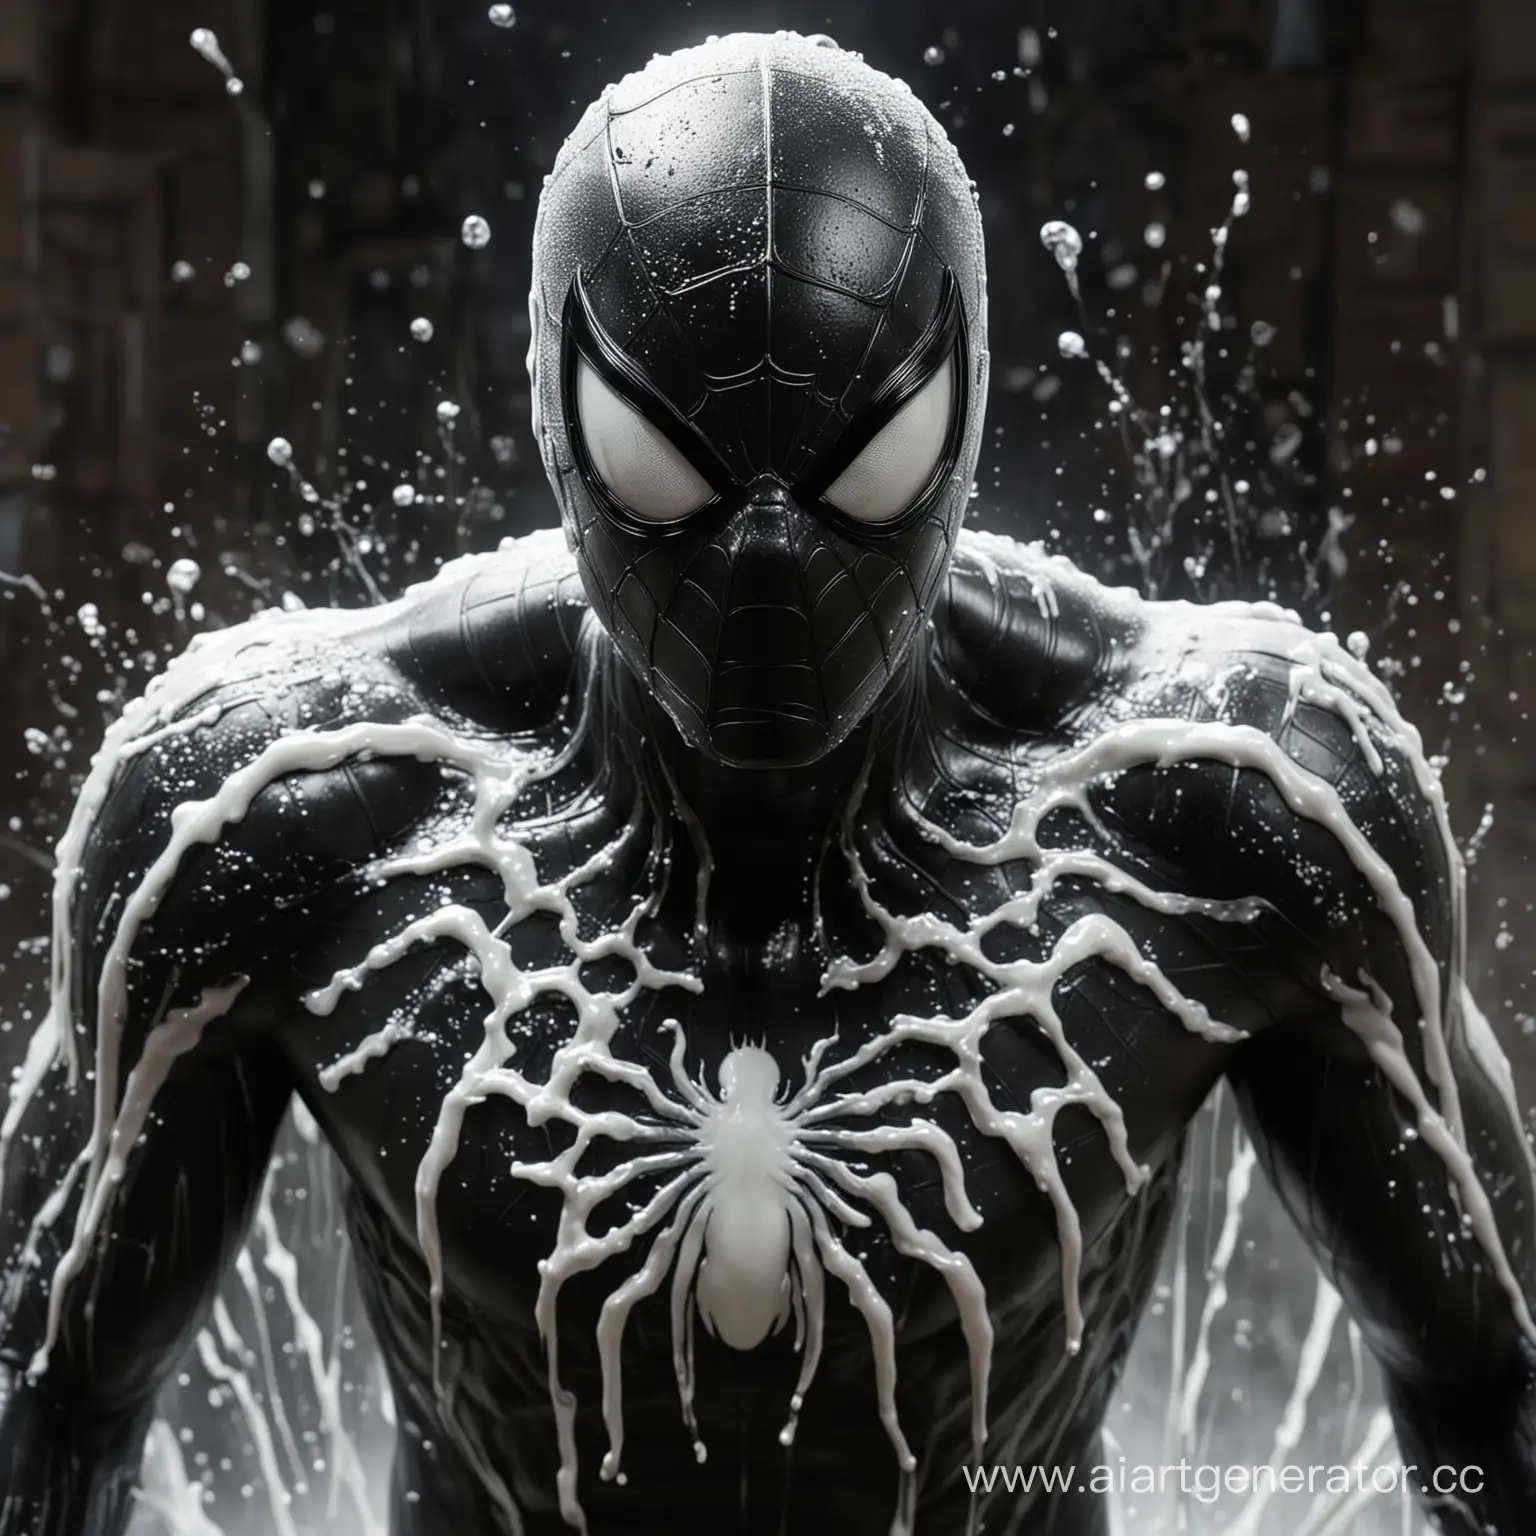 Intense-Black-SpiderMan-with-Mysterious-Liquid-Vigilante-Marvel-Art